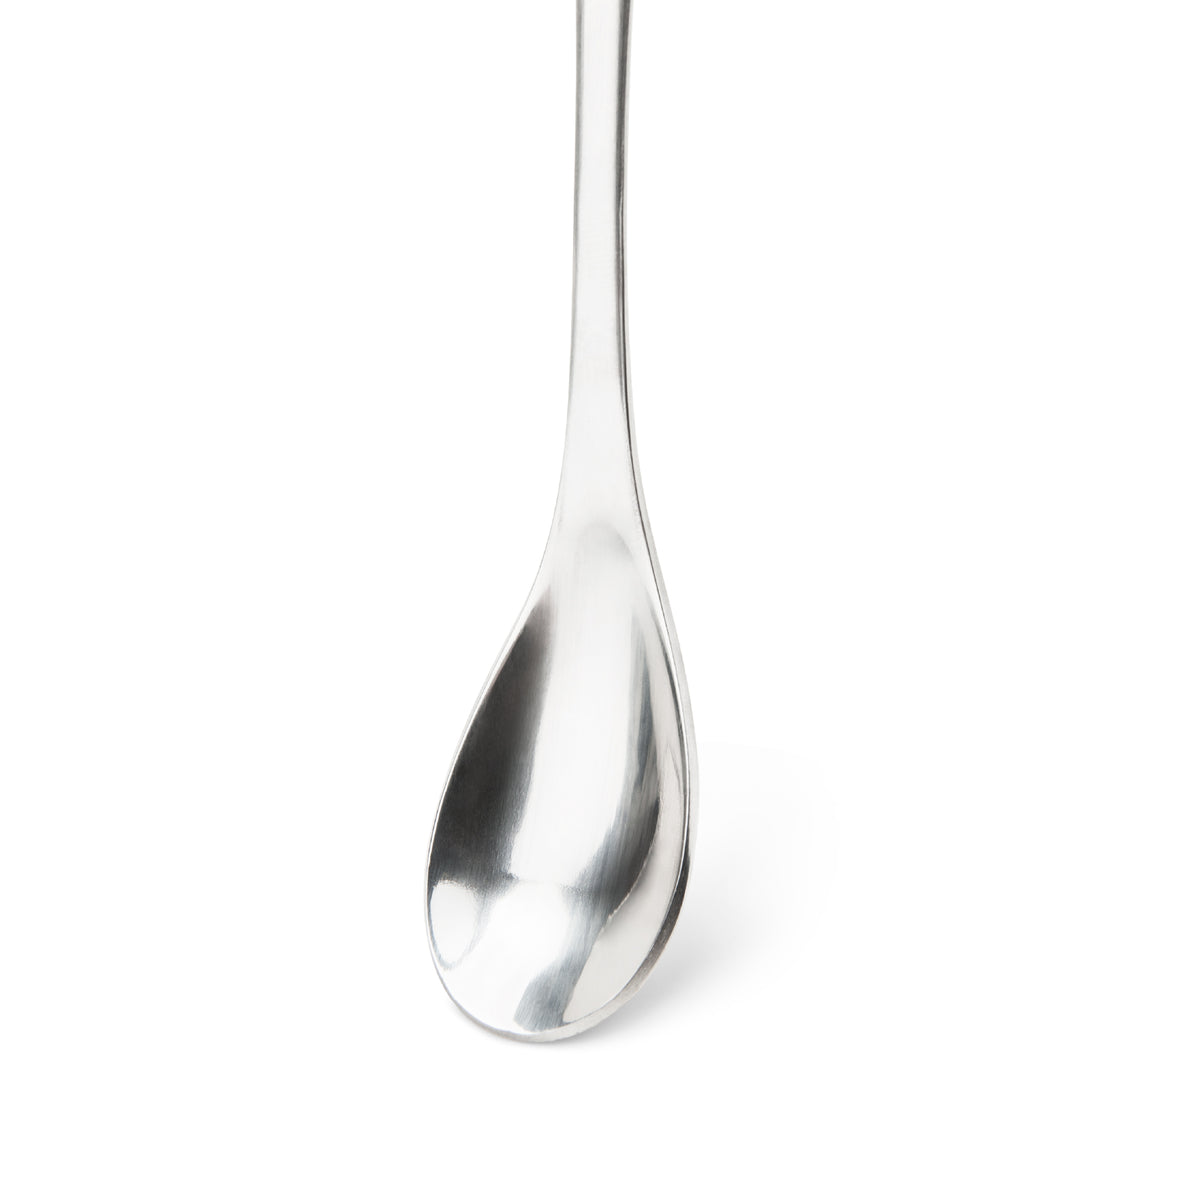 EspressoWorks Tall Coffee Spoon